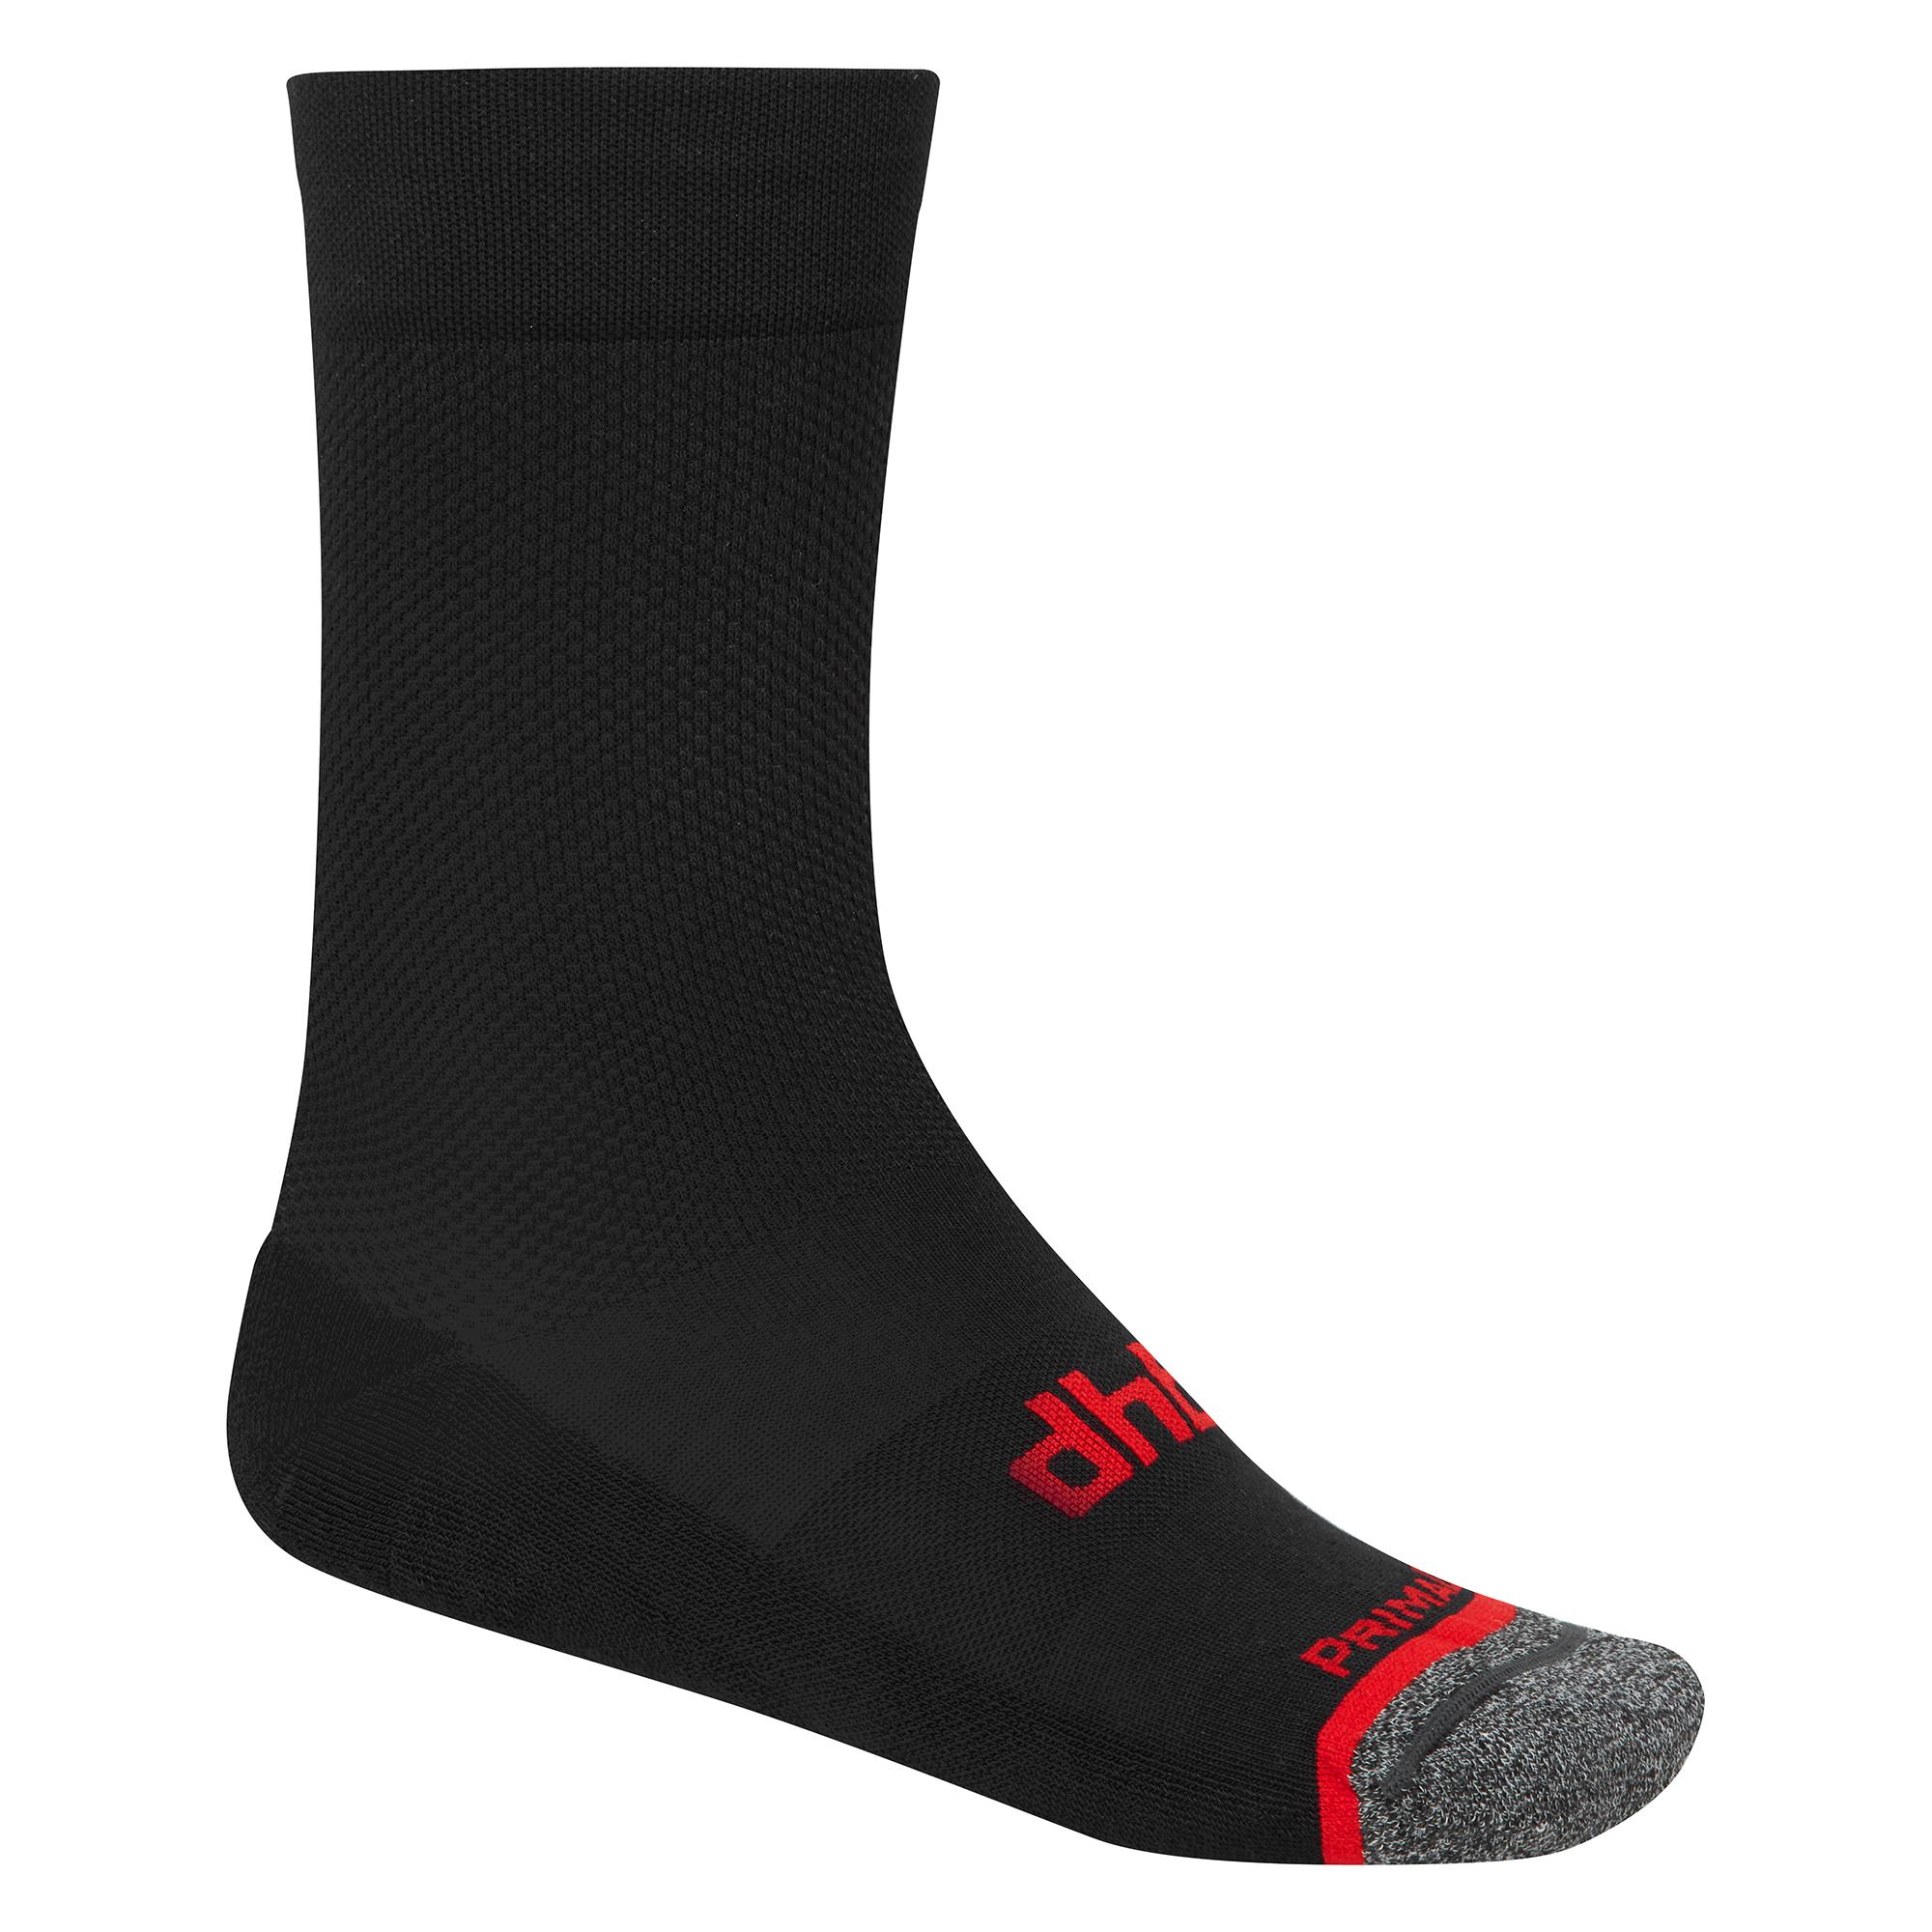 Dhb Aeron Lab Winter Sock  Black/red